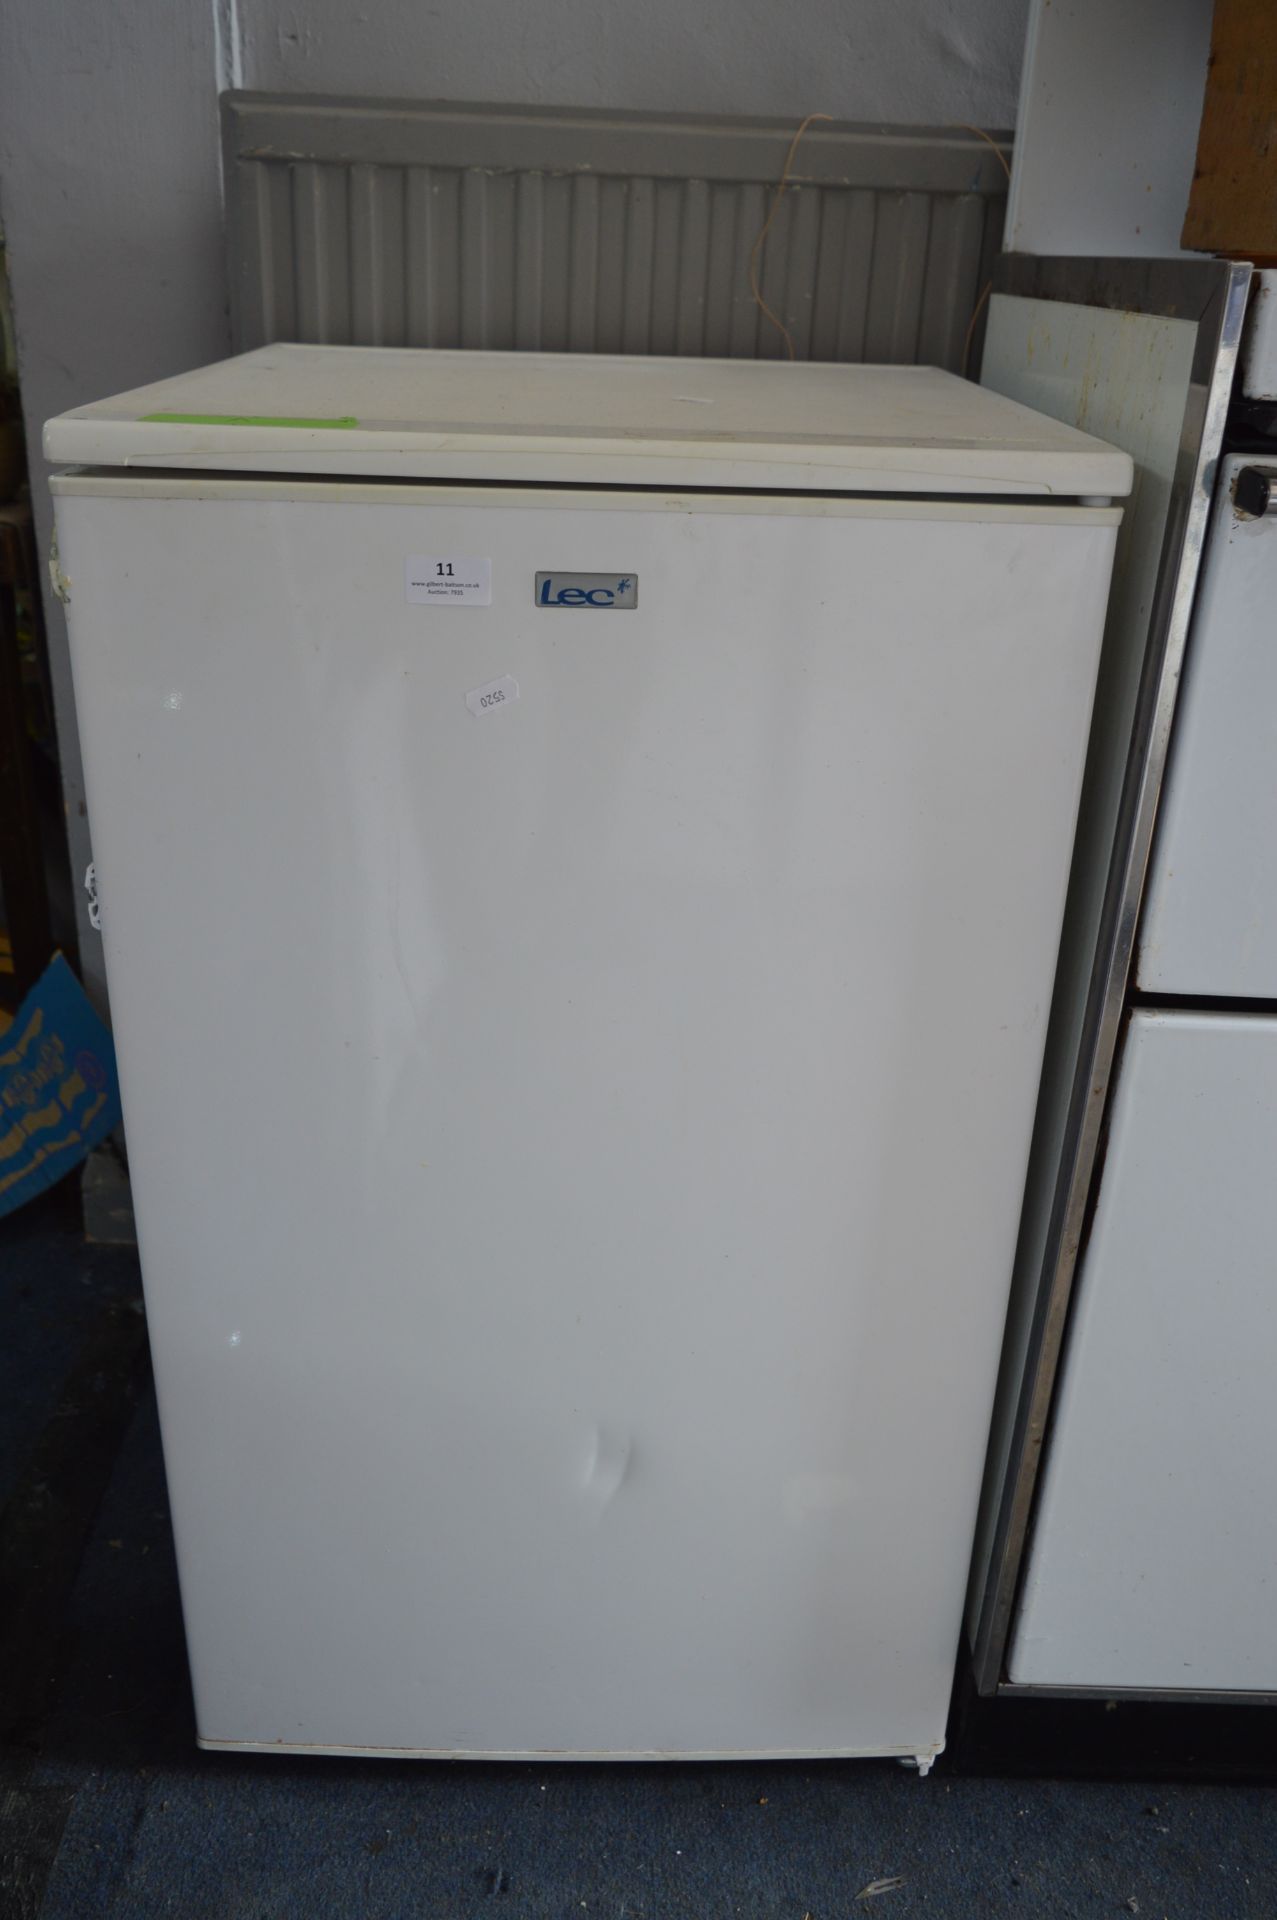 Lec Undercounter Refrigerator